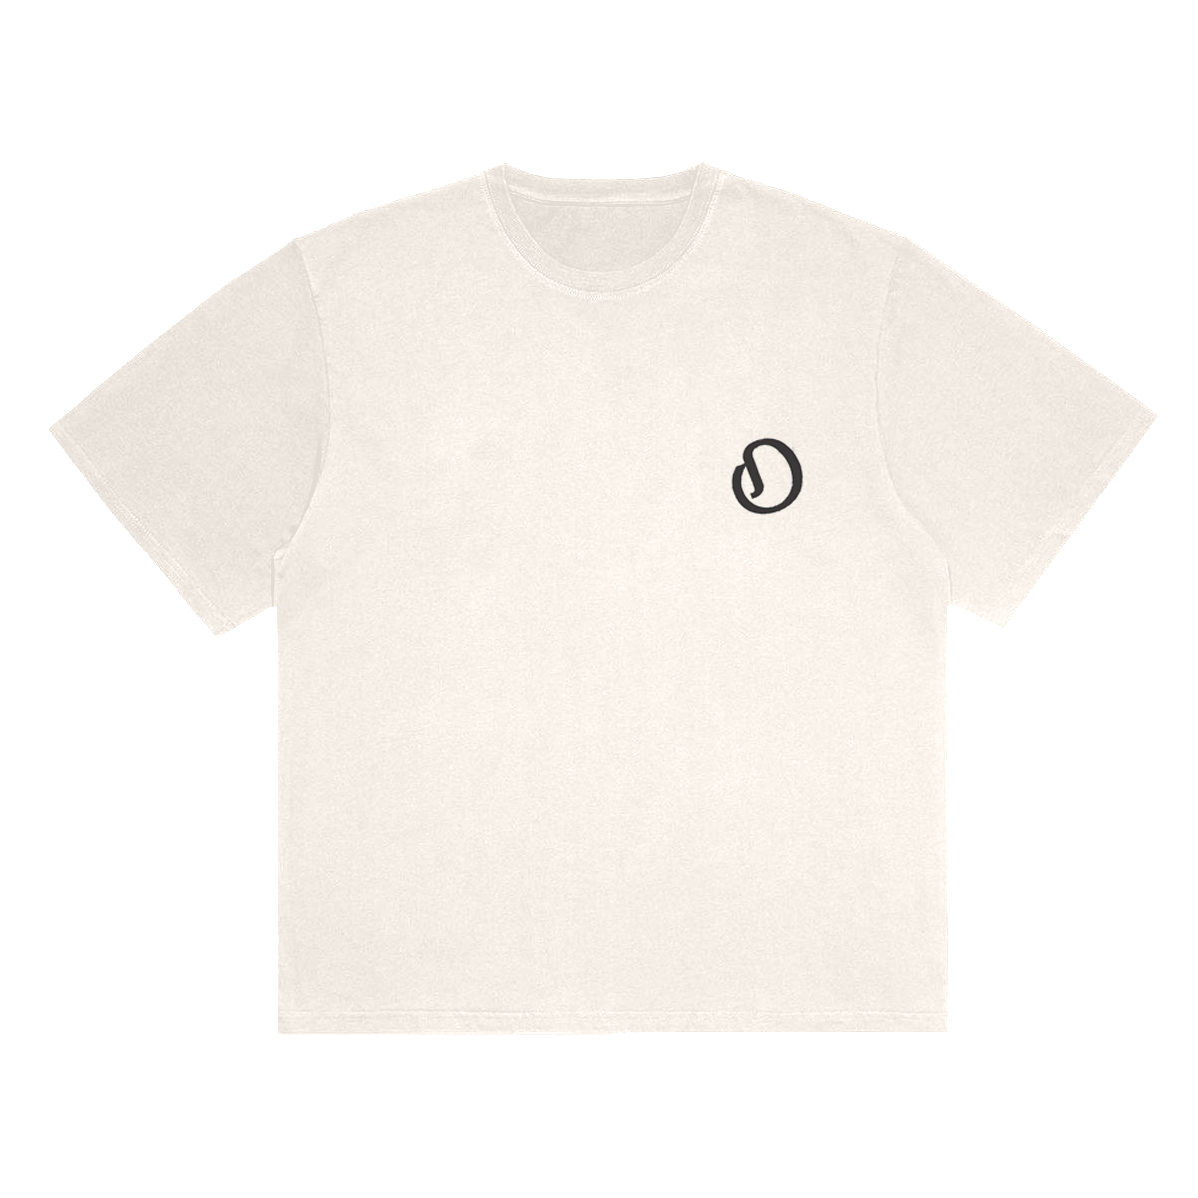 Jordan Rakei - White The Loop T-Shirt